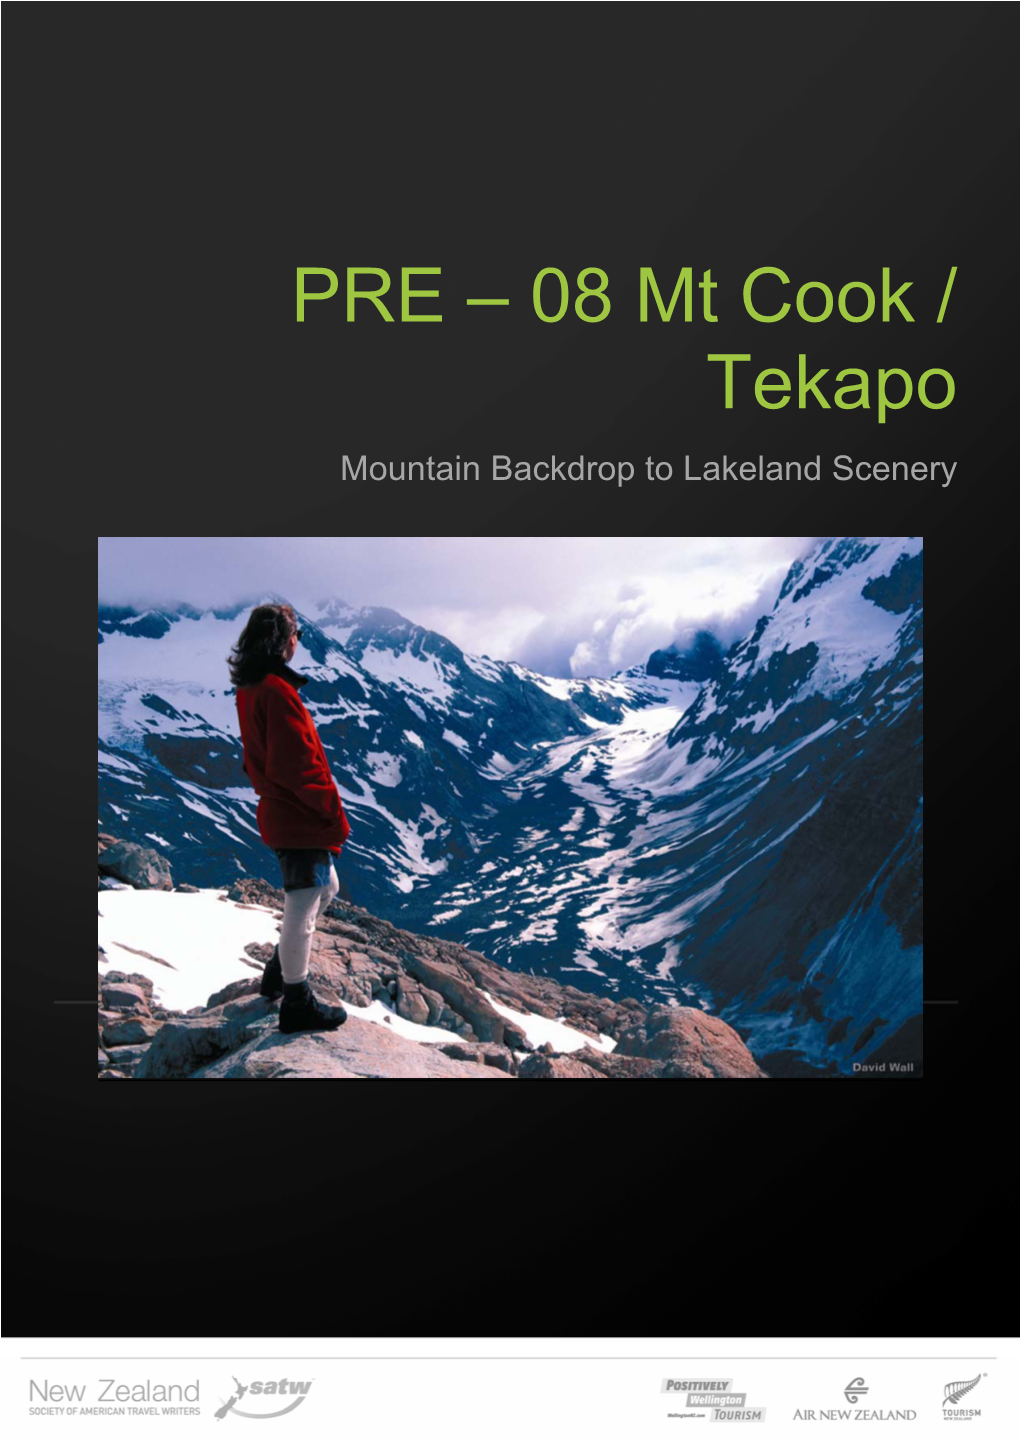 PRE – 08 Mt Cook / Tekapo